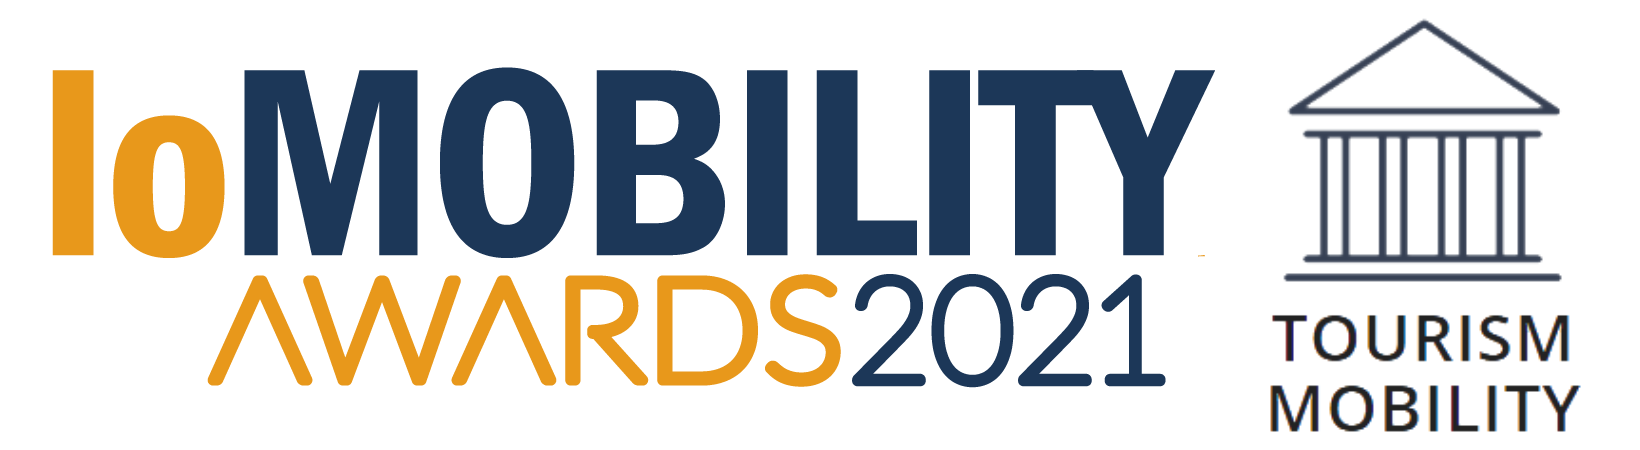 News IoMobility Awards 2021 - Abaco Mobility